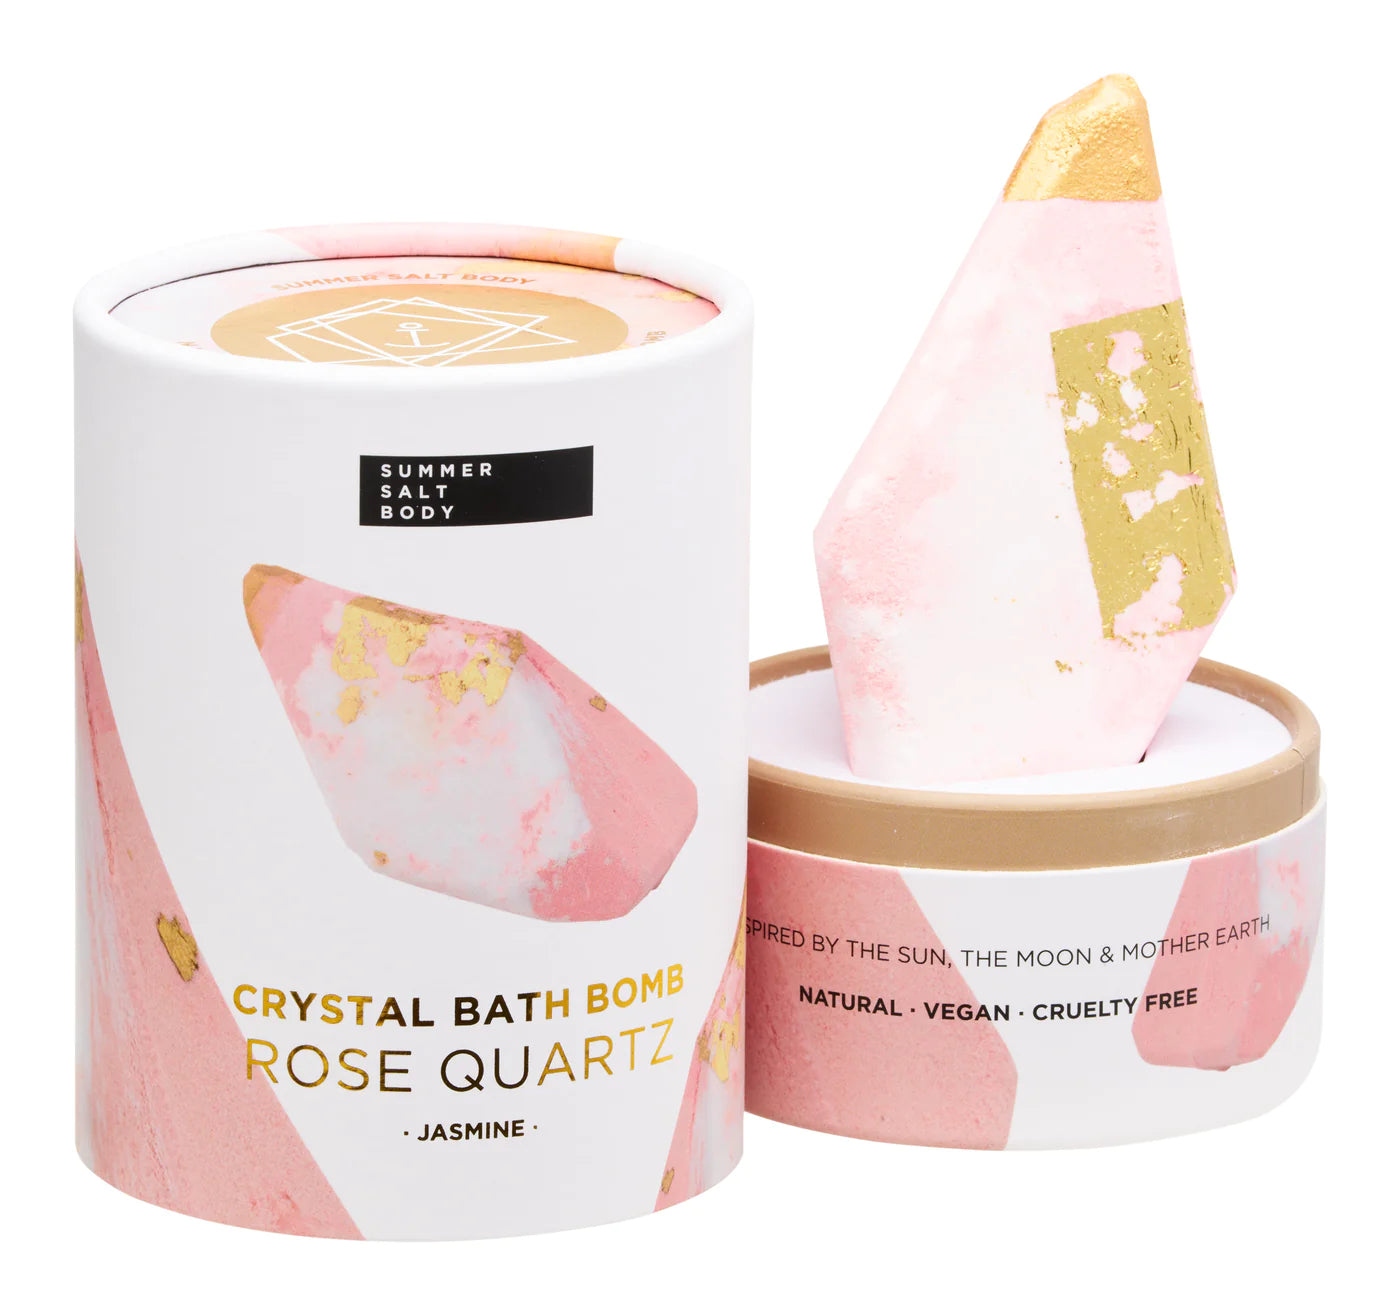 Summer Salt Body - Crystal Bath Bomb (Rose Quartz Jasmine)